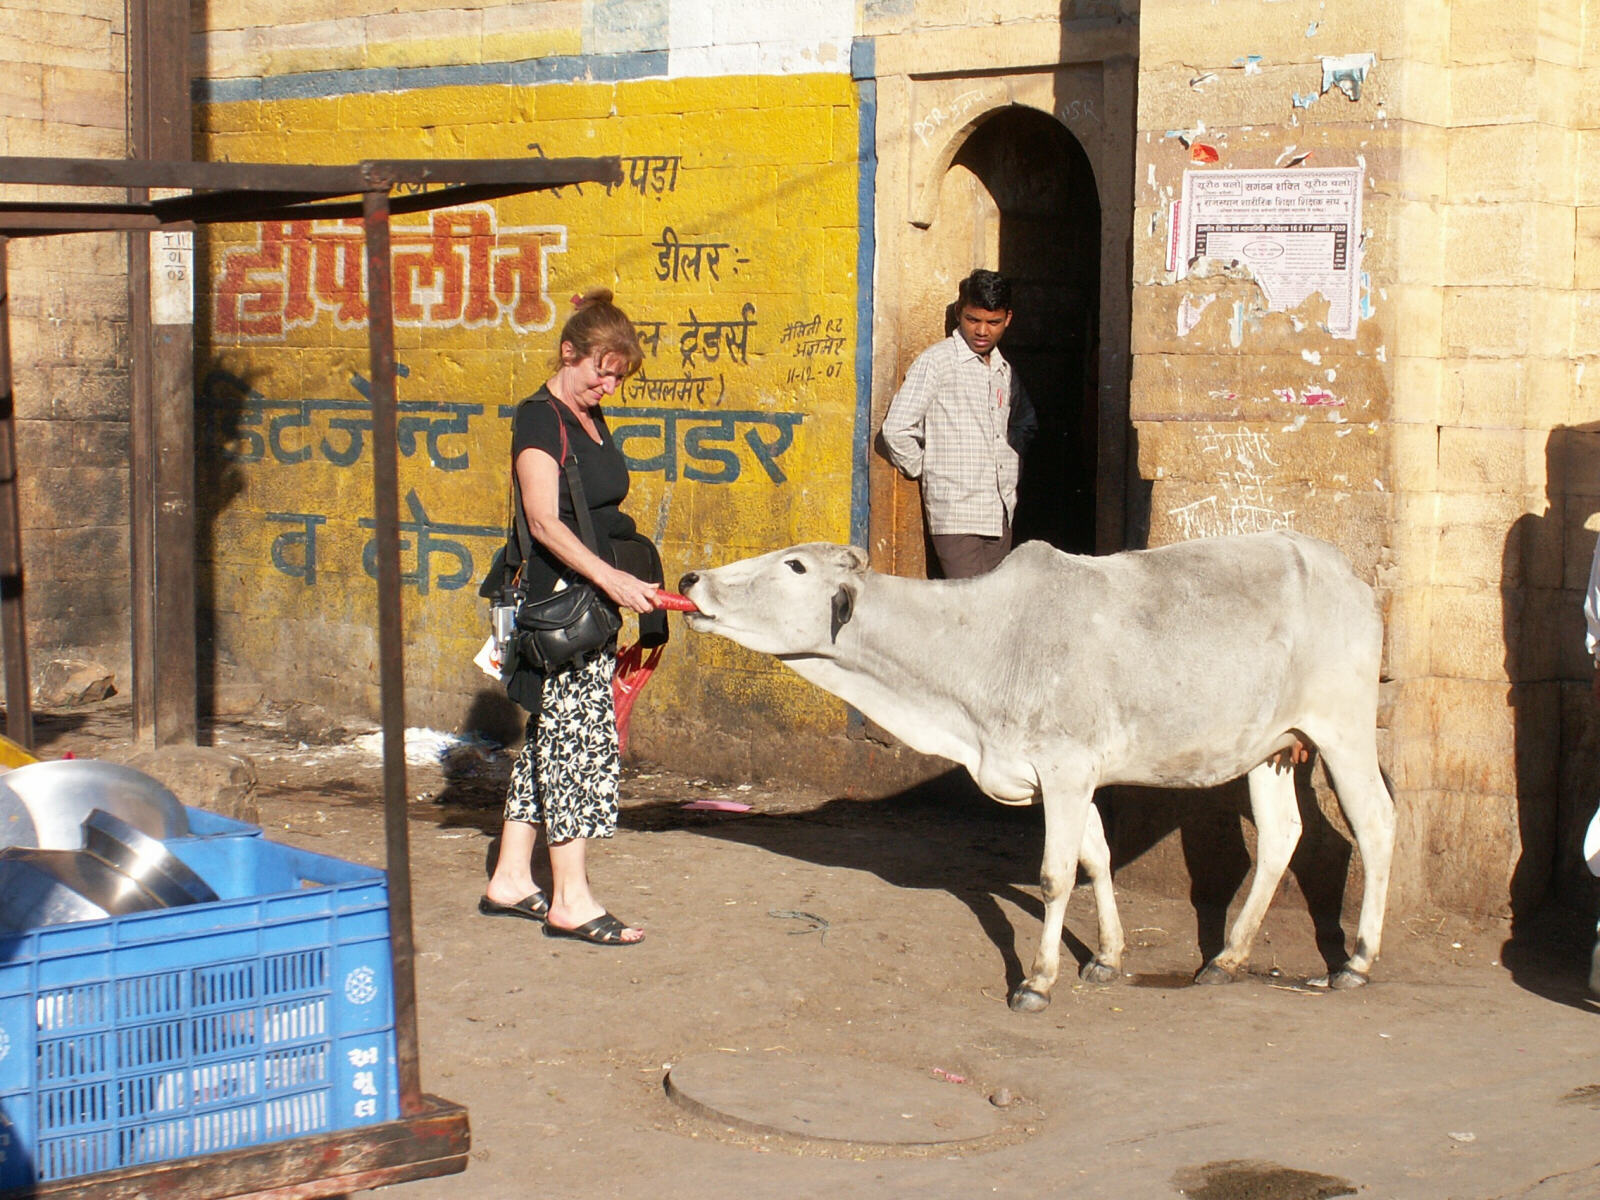 Feeding a cow in a street in Jaisalmer, Rajasthan